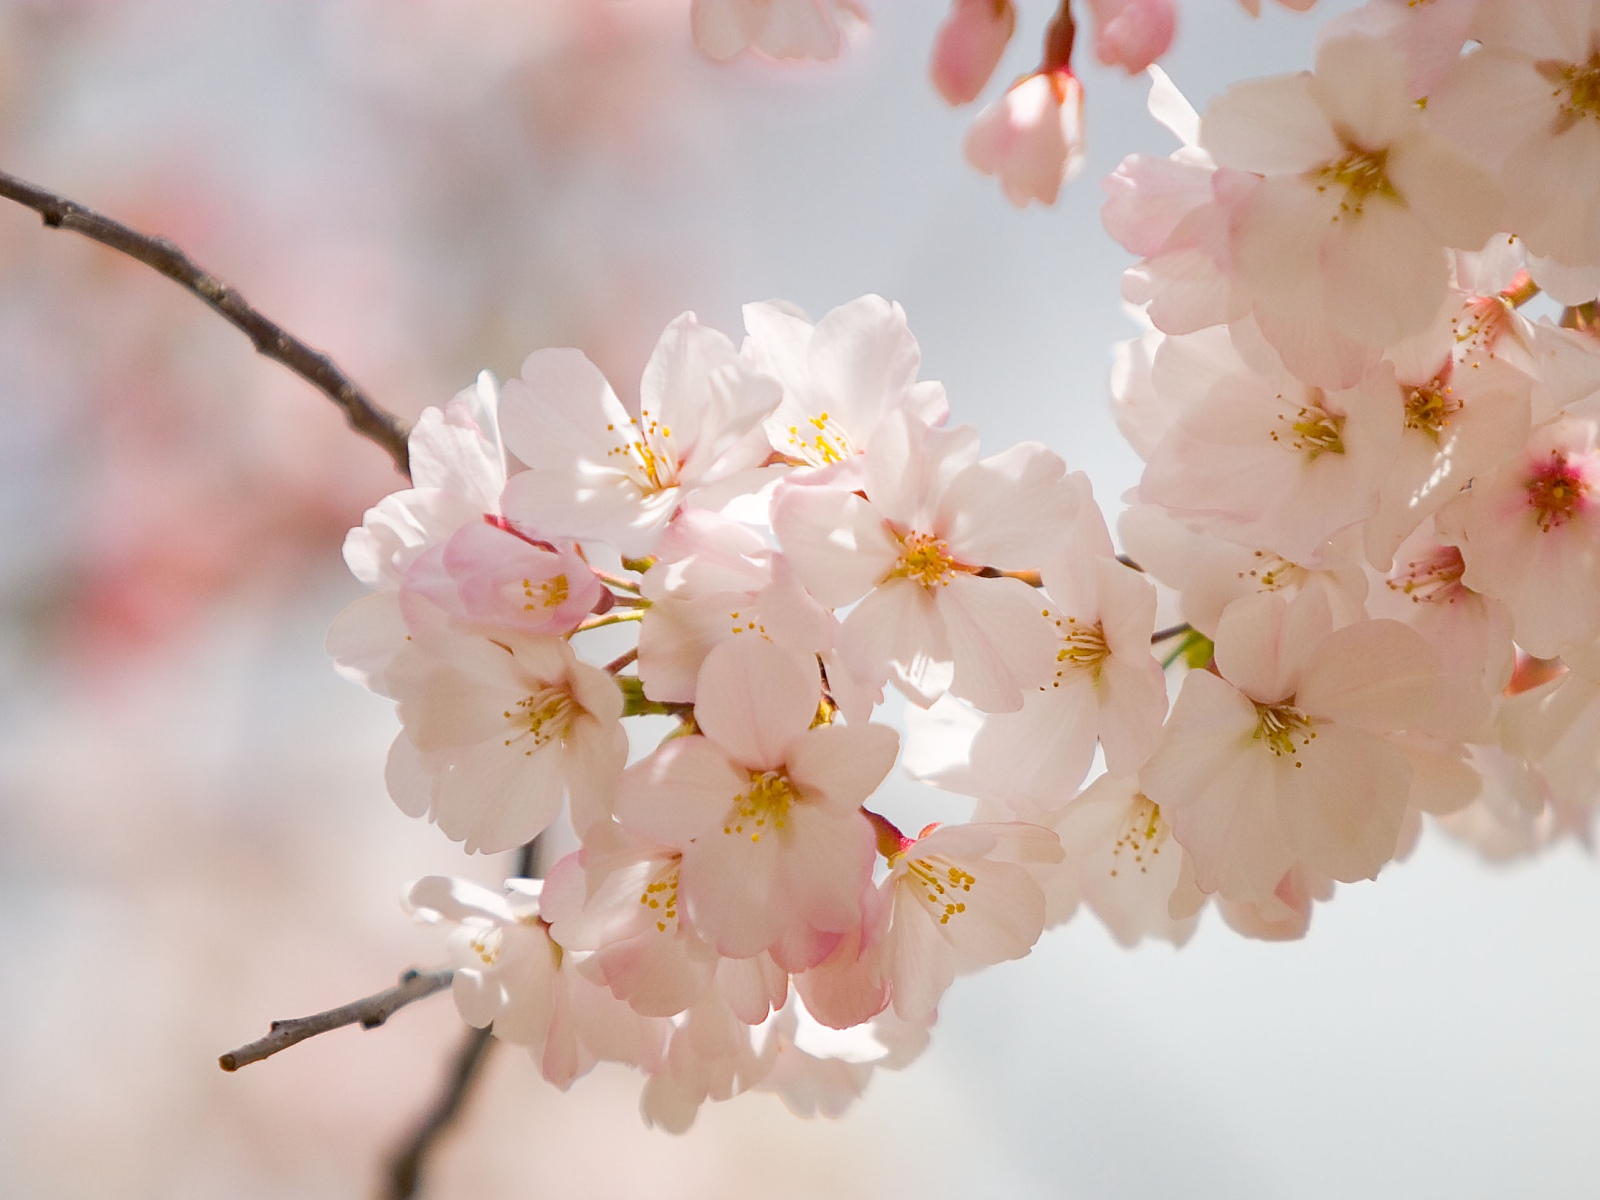 Nature Four Seasons: Spring Wedding Flowers in Season